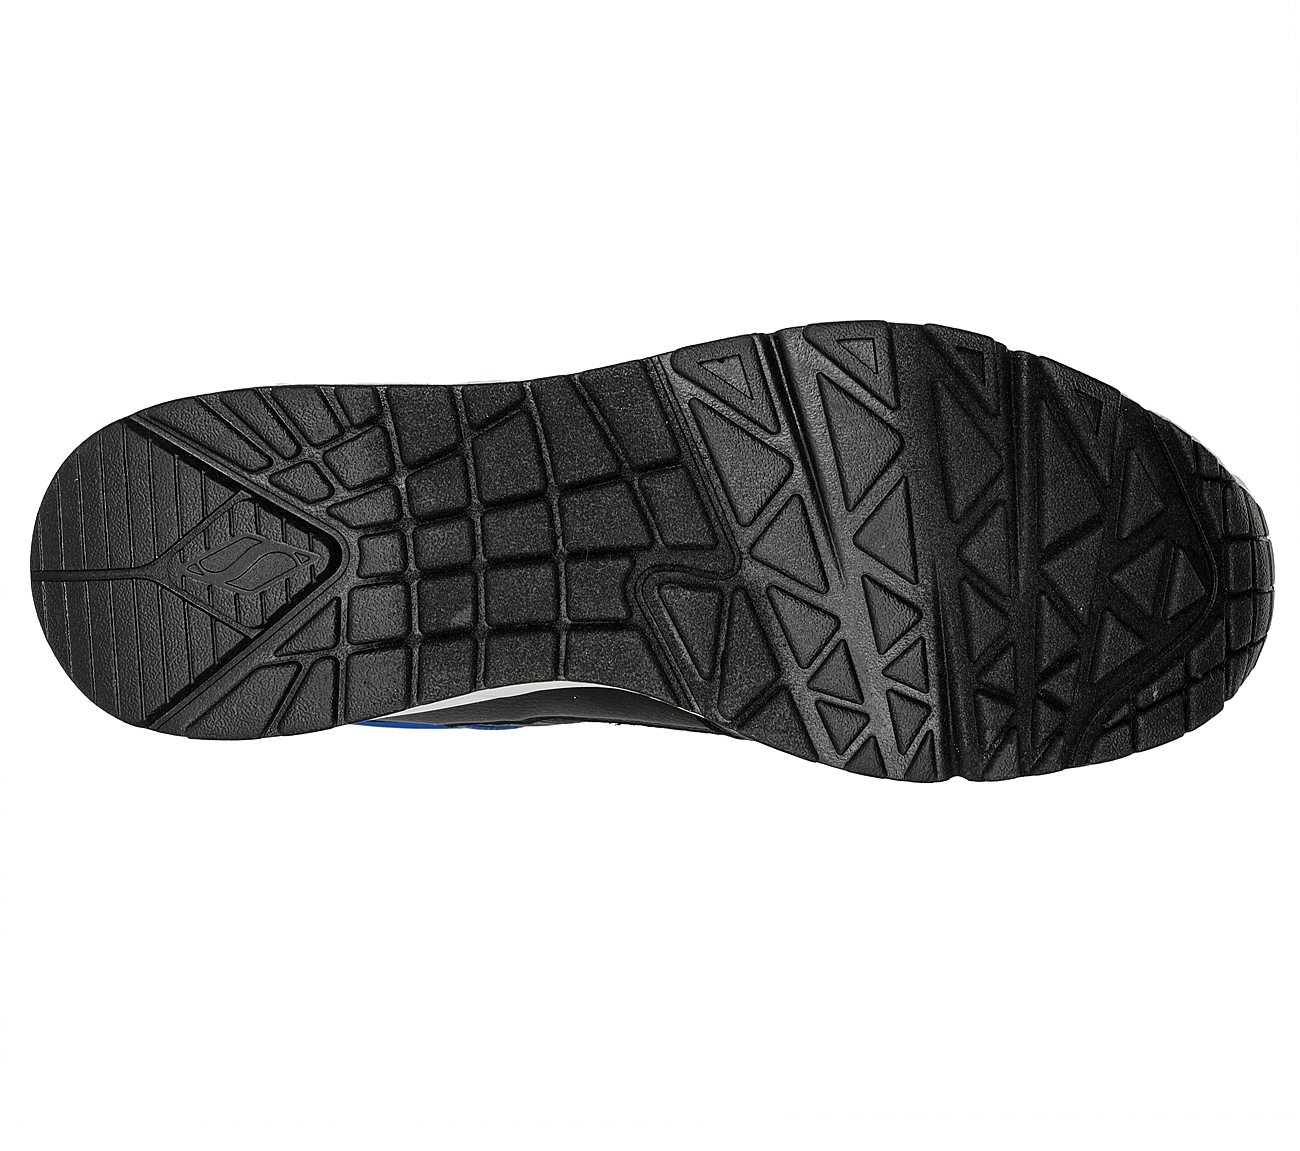 UNO - KEEP CLOSE, BLACK/BLUE Footwear Bottom View